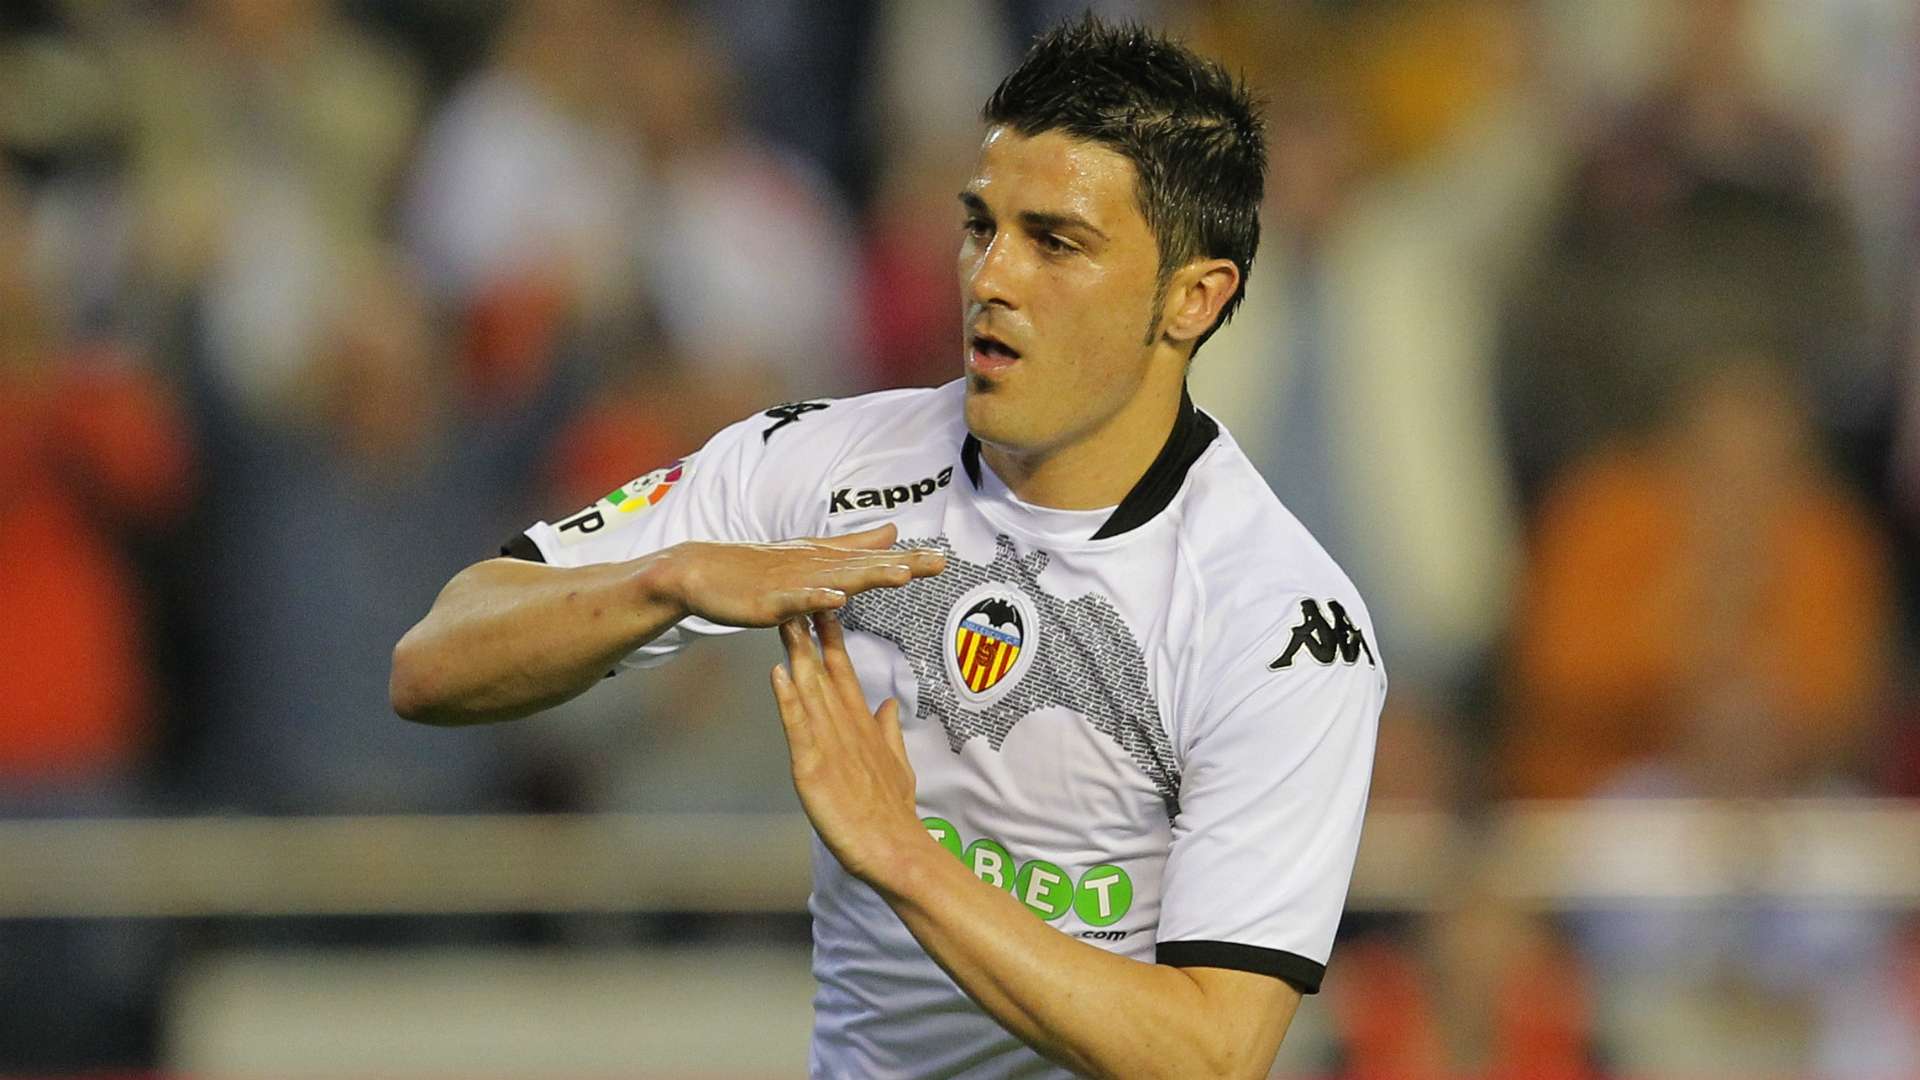 David Villa ex Valencia player